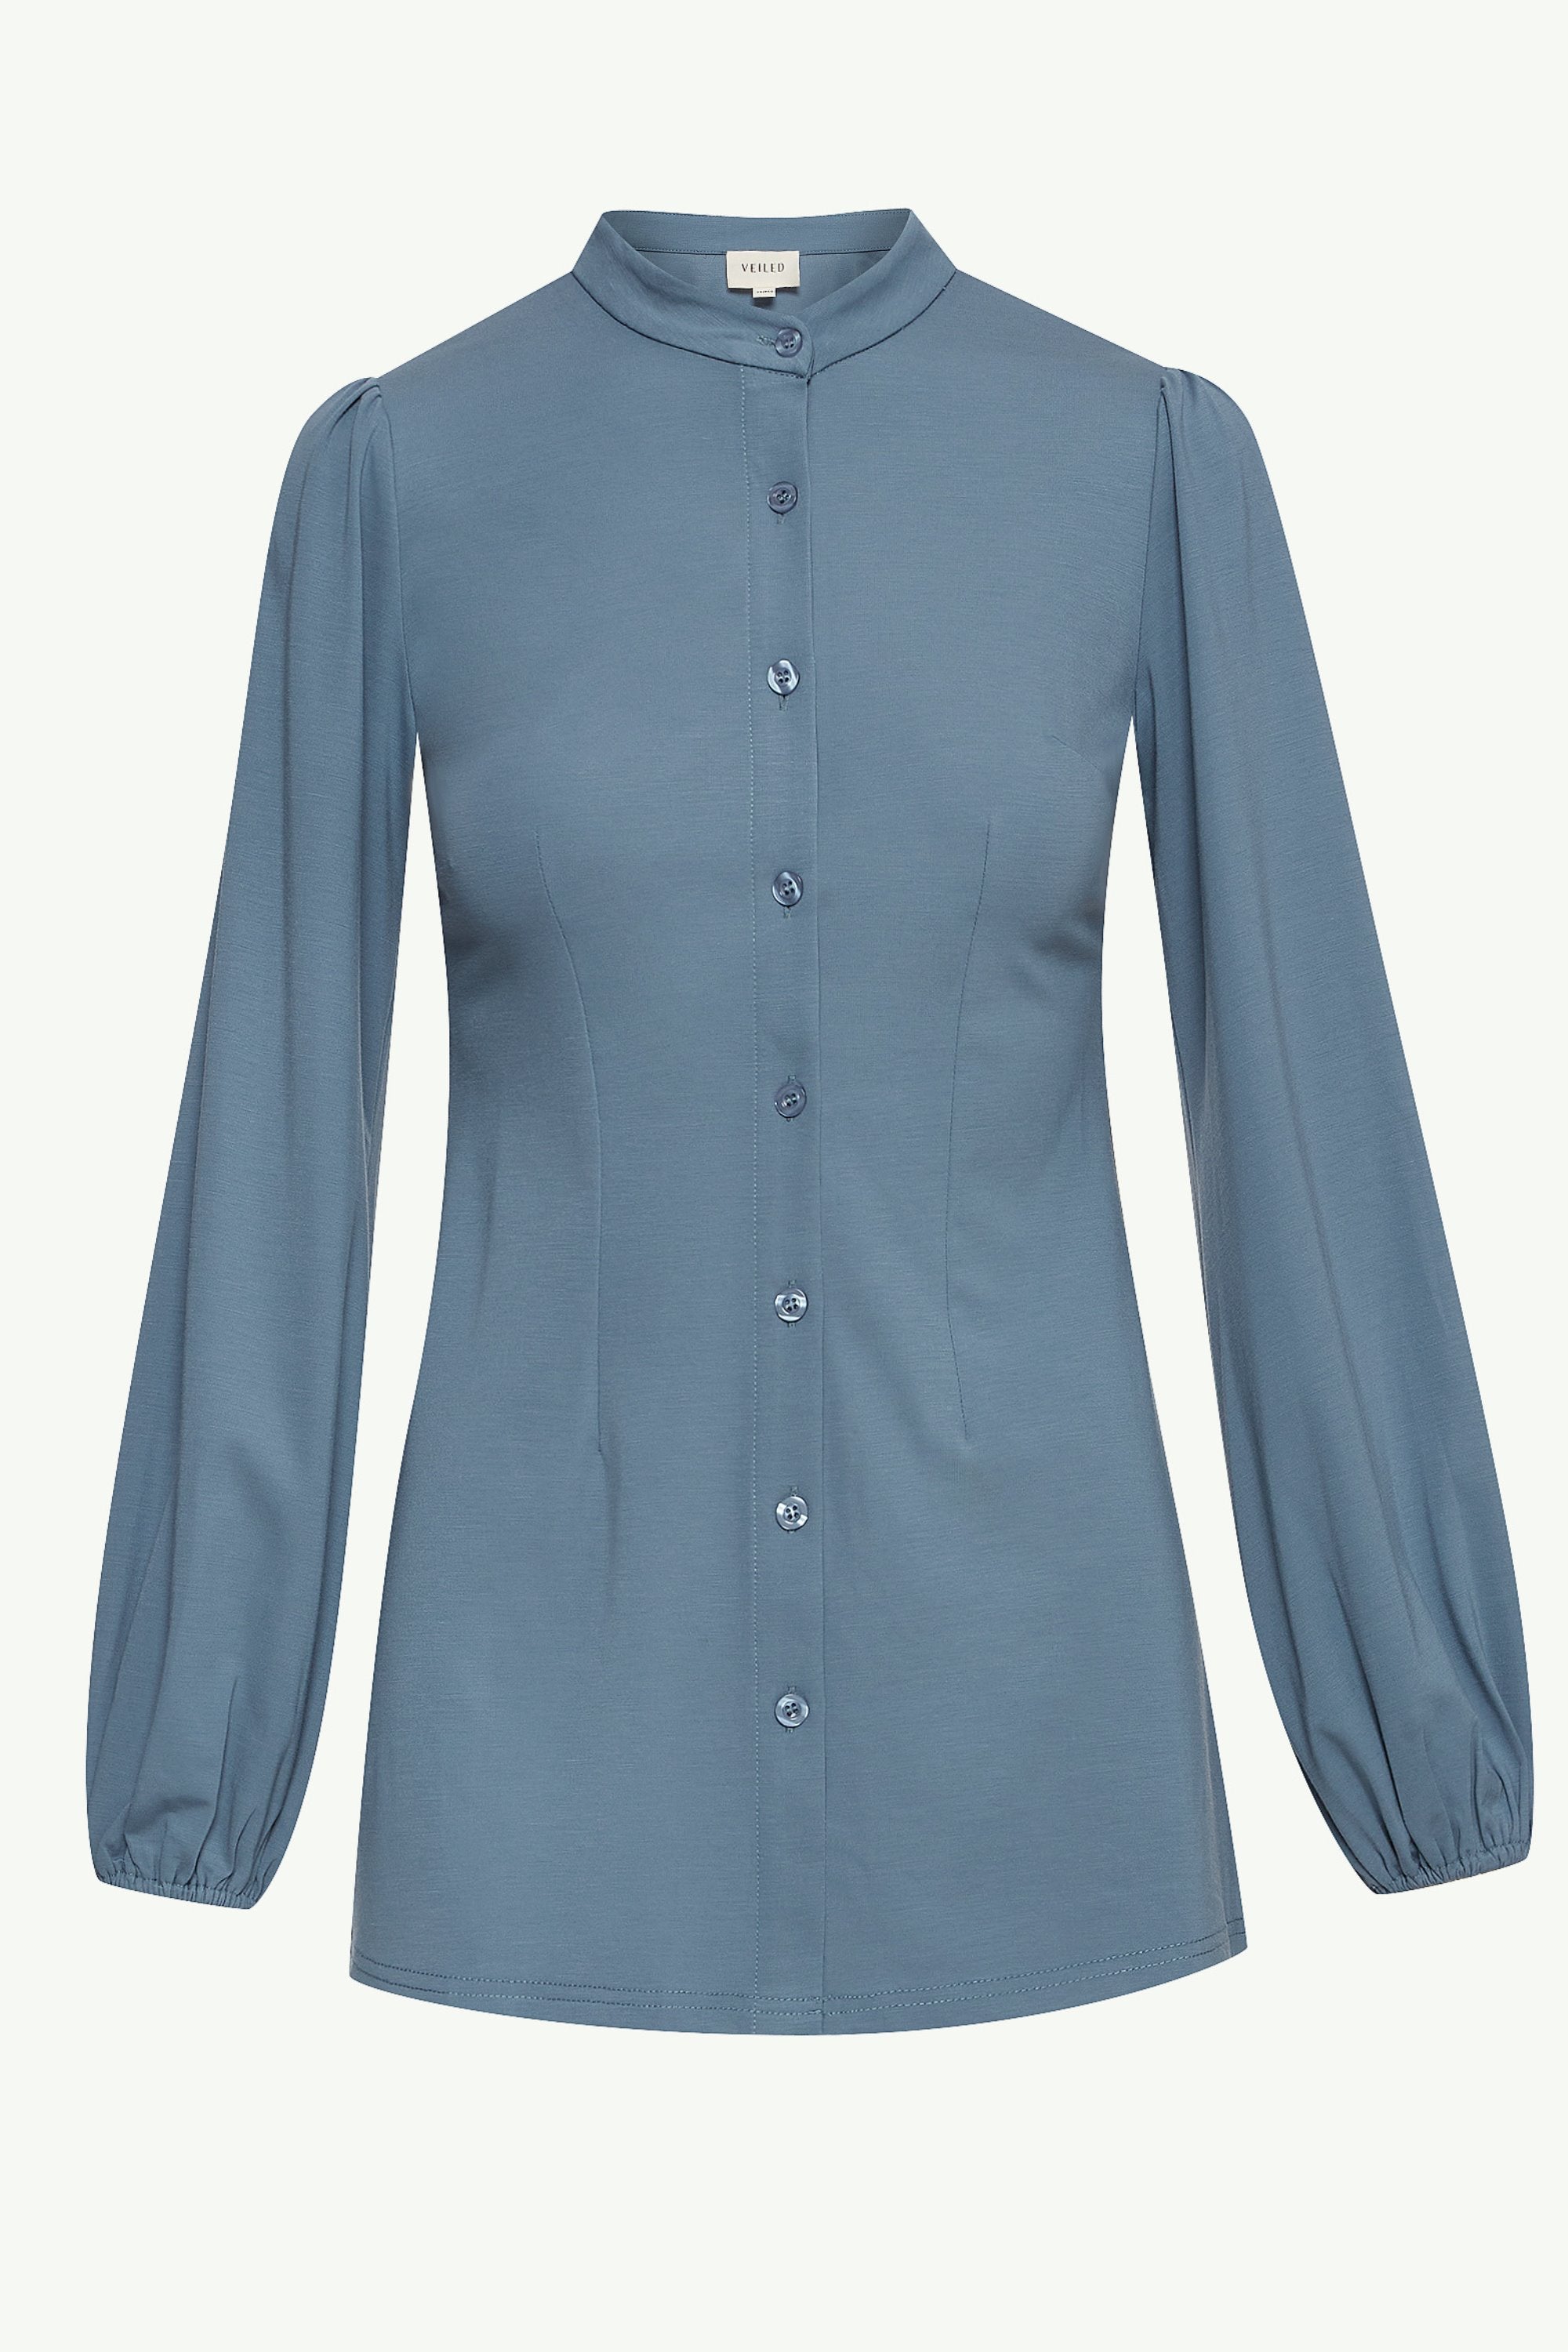 Rayana Jersey Button Down Top - Denim Blue Clothing saigonodysseyhotel 